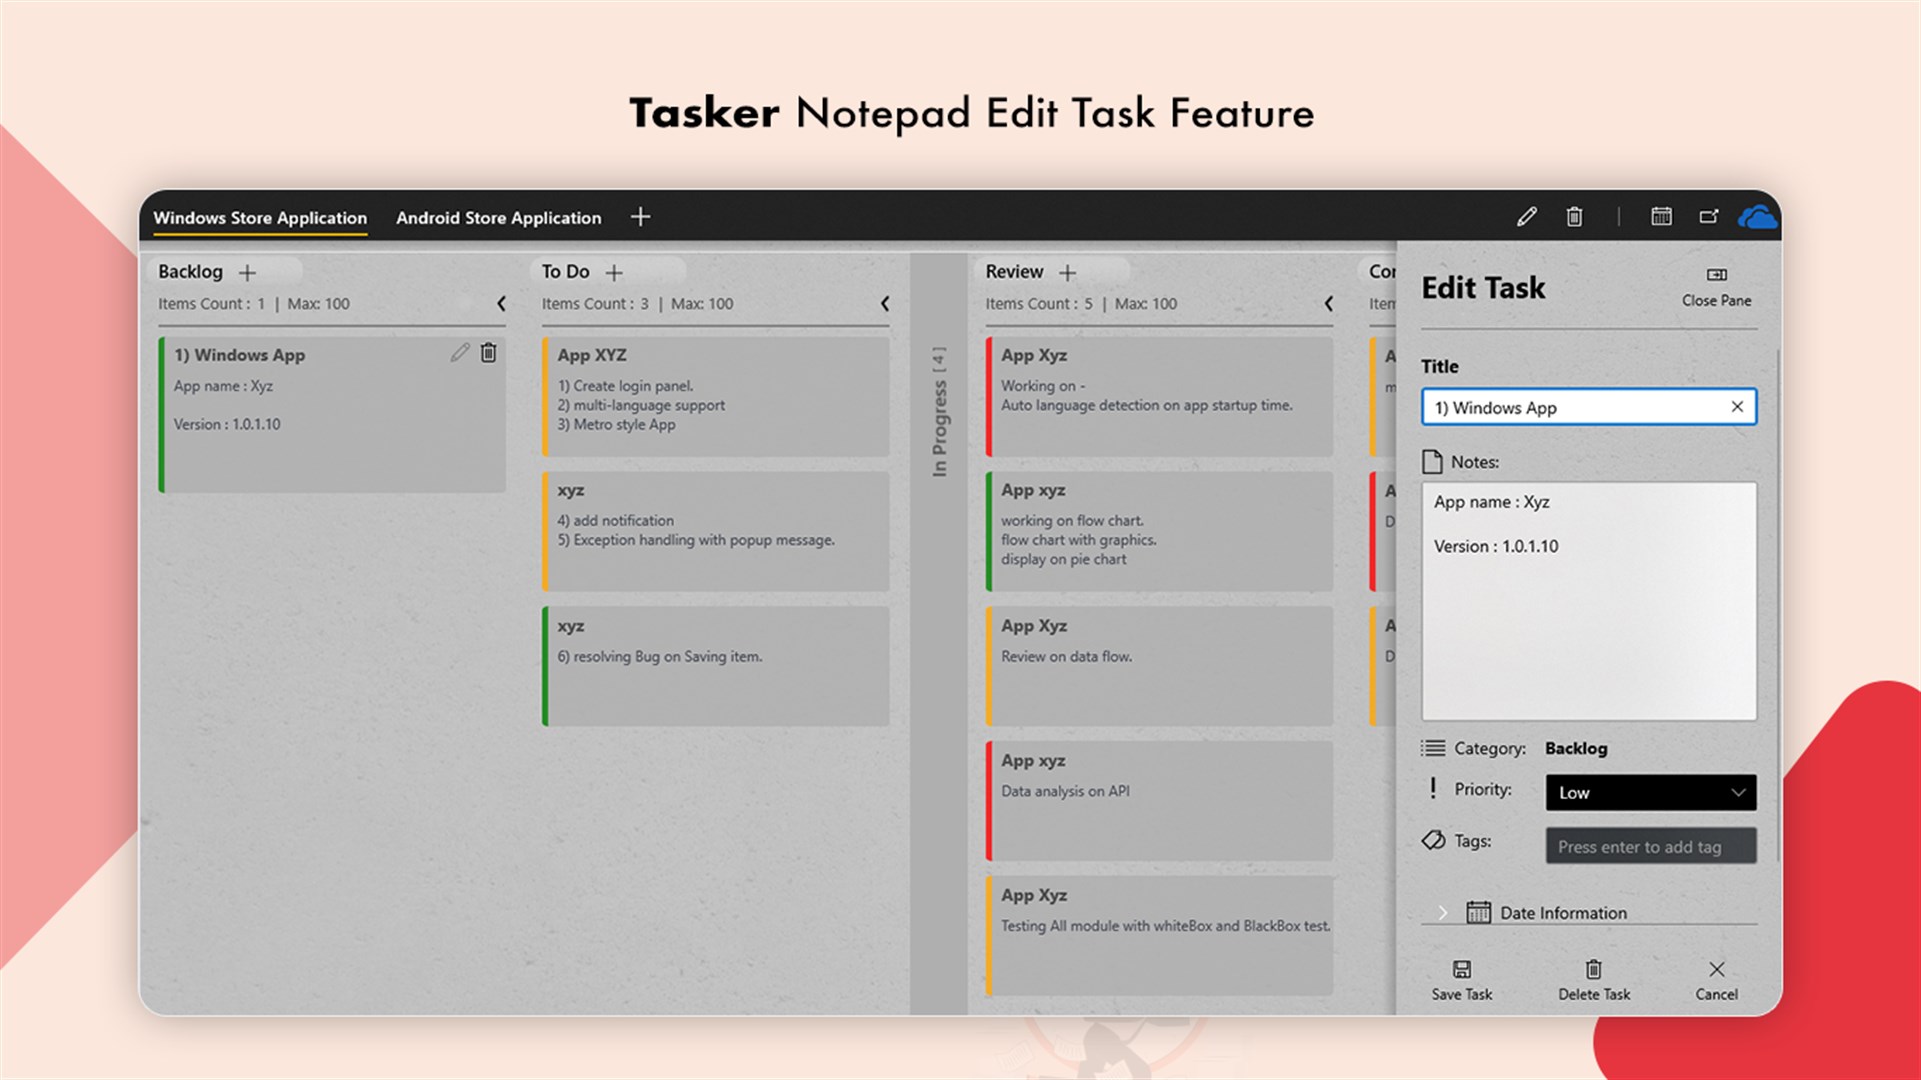 klint botanist læbe Tasker - Notepad Notes Organizer and Work Tracker - Microsoft Apps